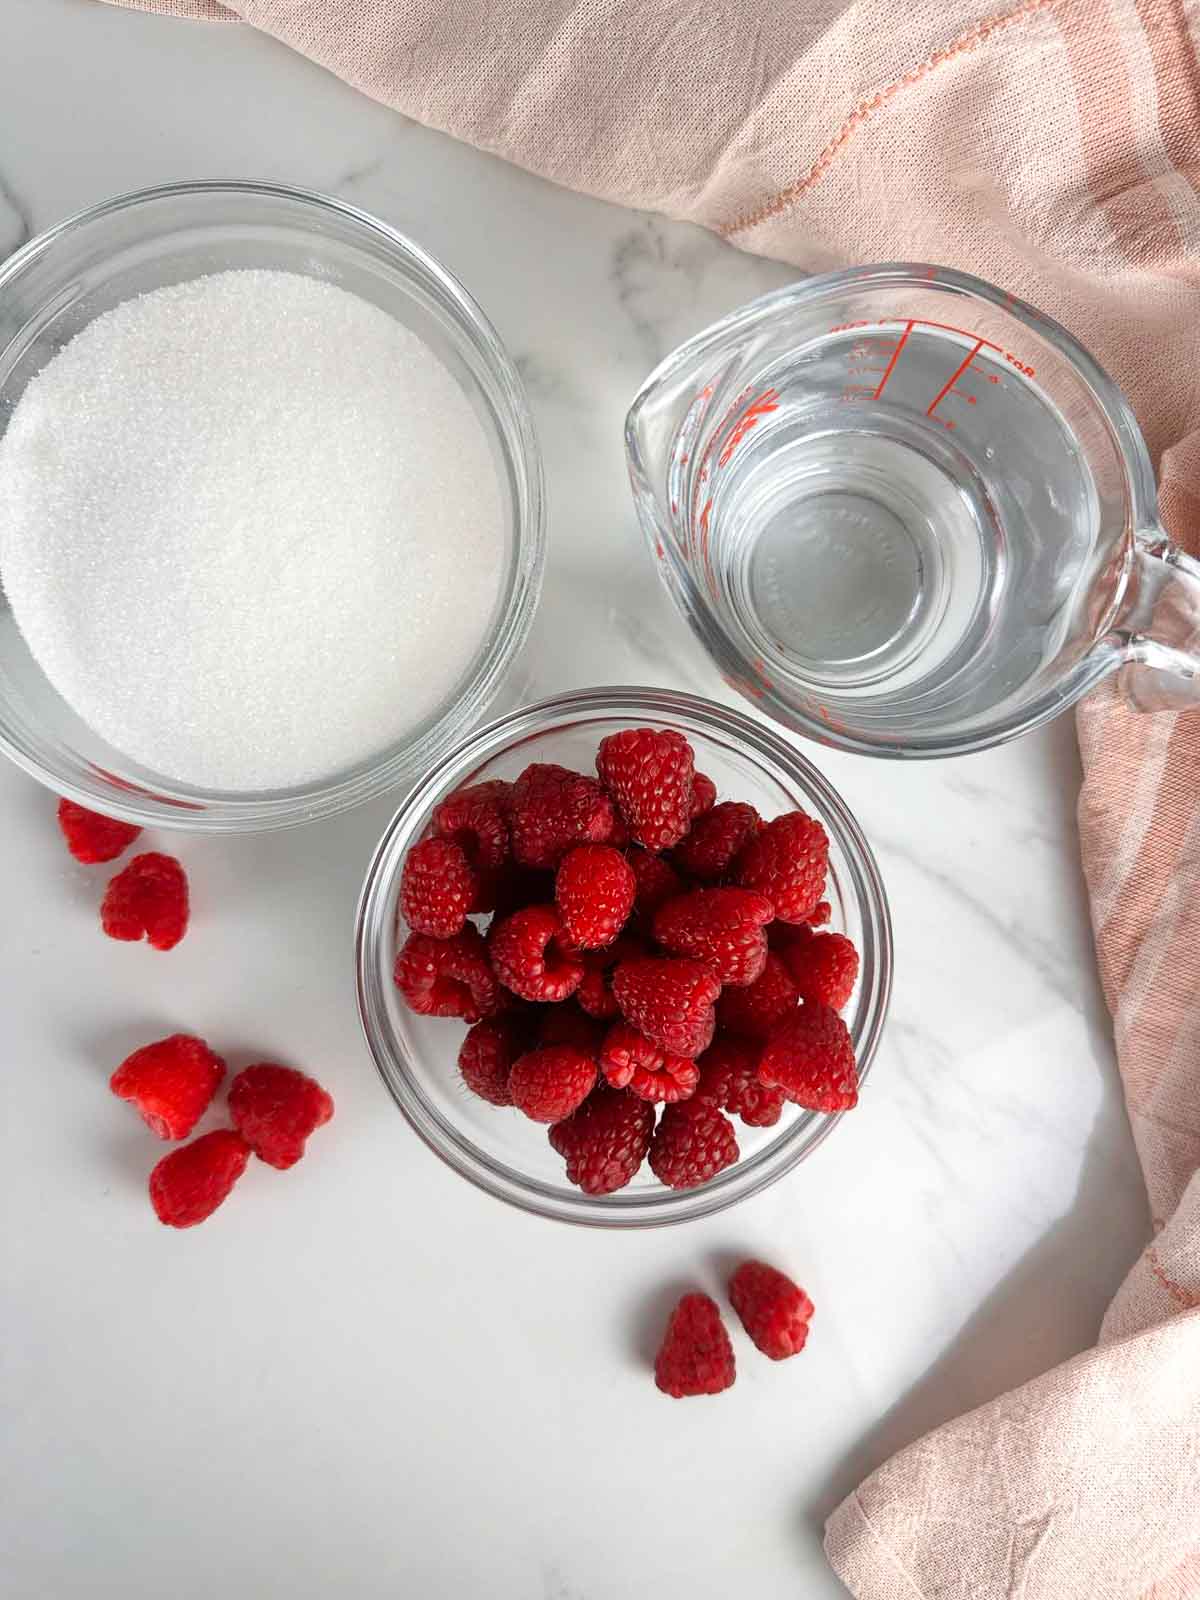 Ingredients for raspberry simple syrup for drinks: sugar, water, raspberries